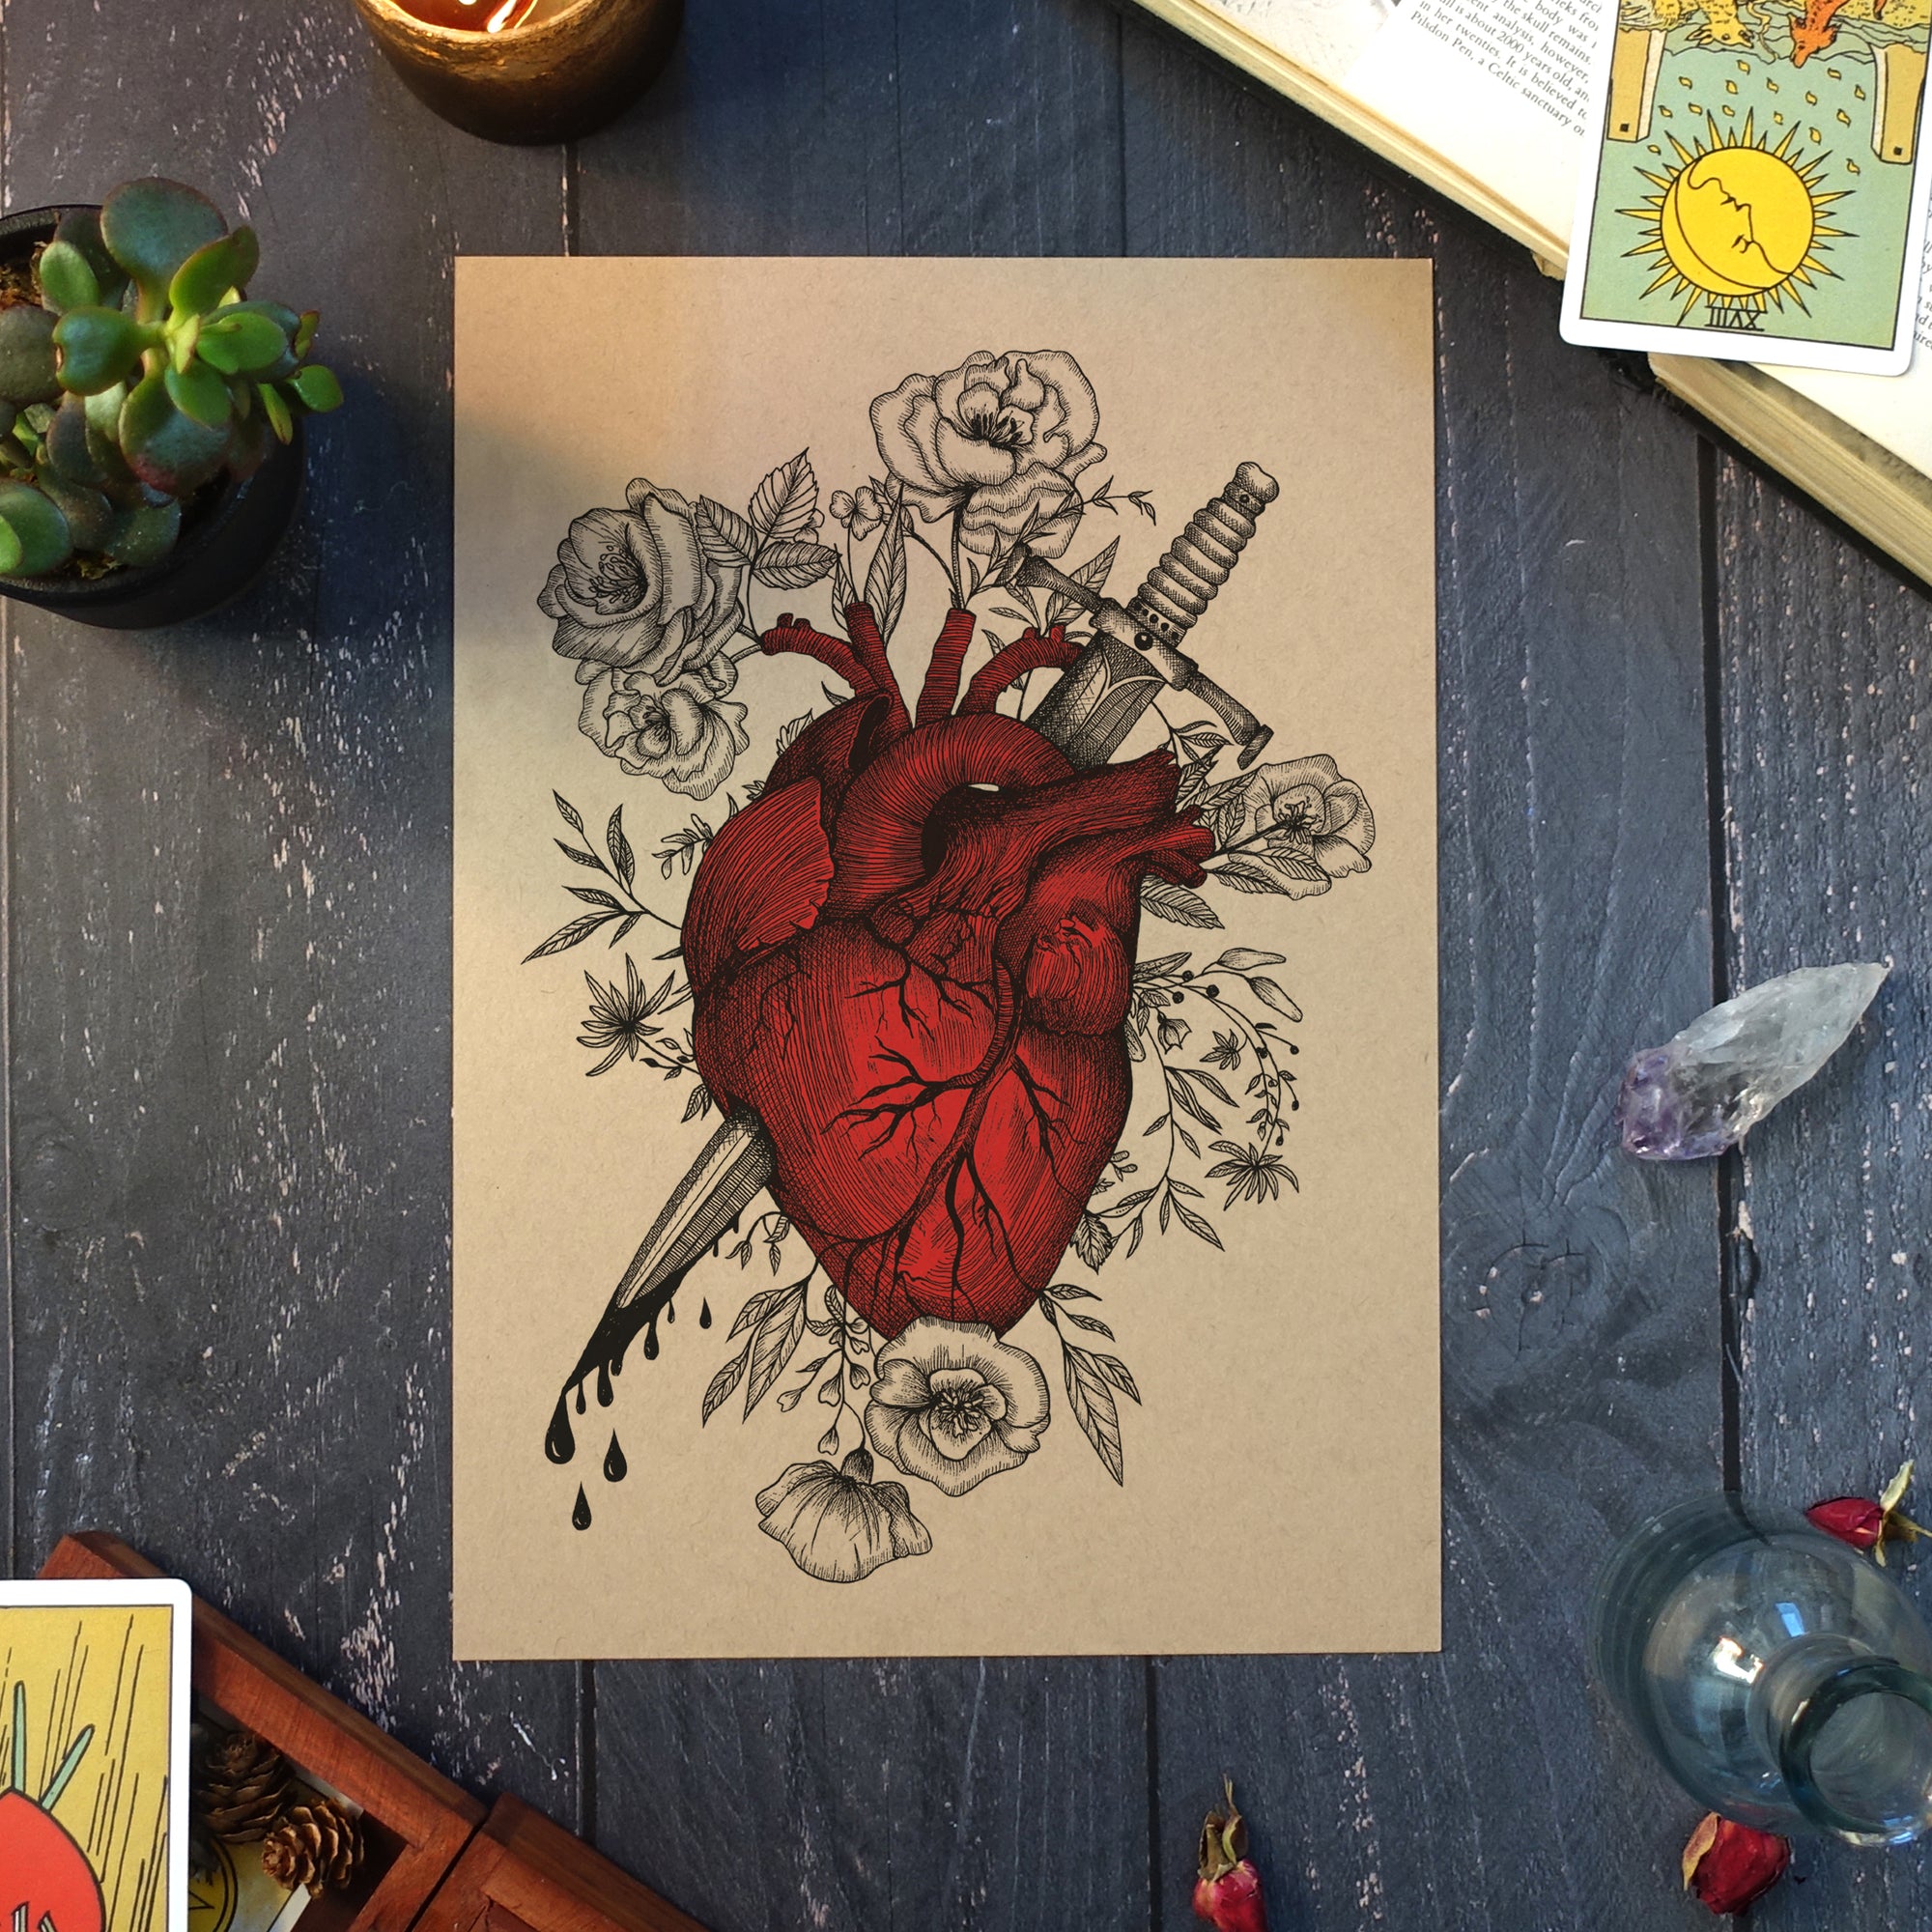 Bleeding Heart - Kraft Art Print